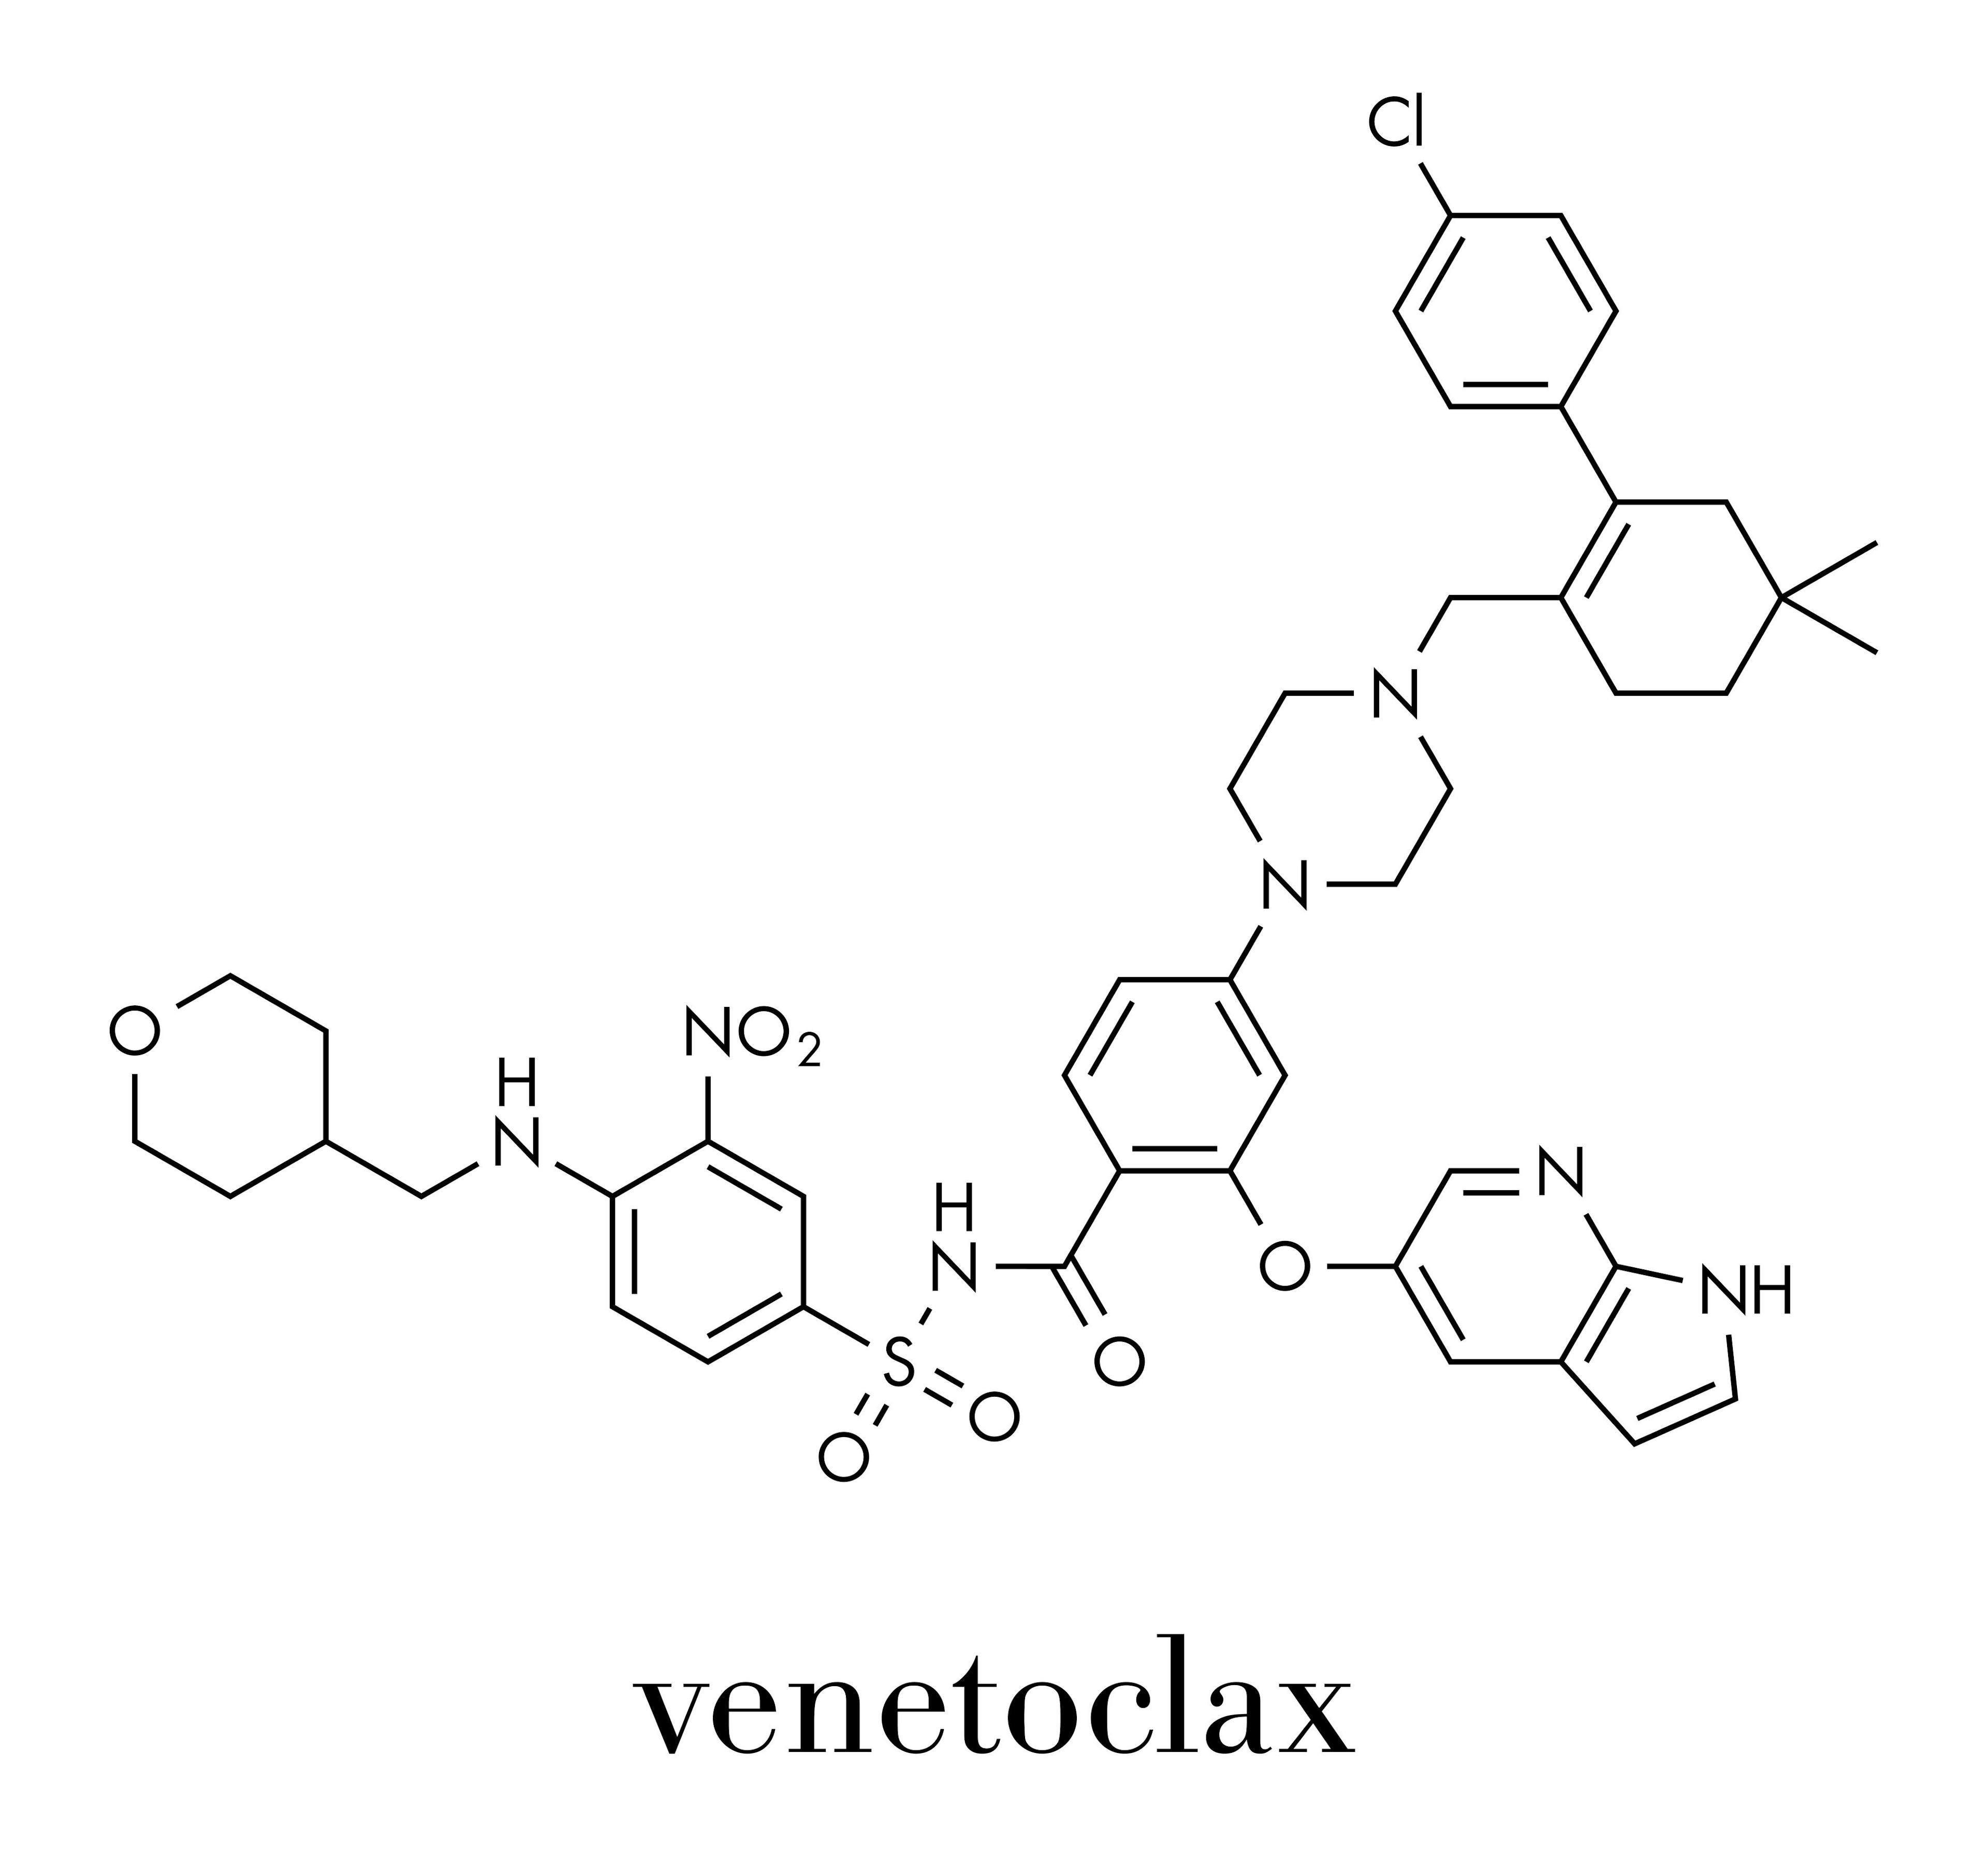 Venetoclax cancer drug molecule-BCL-2 inhibitor | Image Credit: molekuul.be - stock.adobe.com